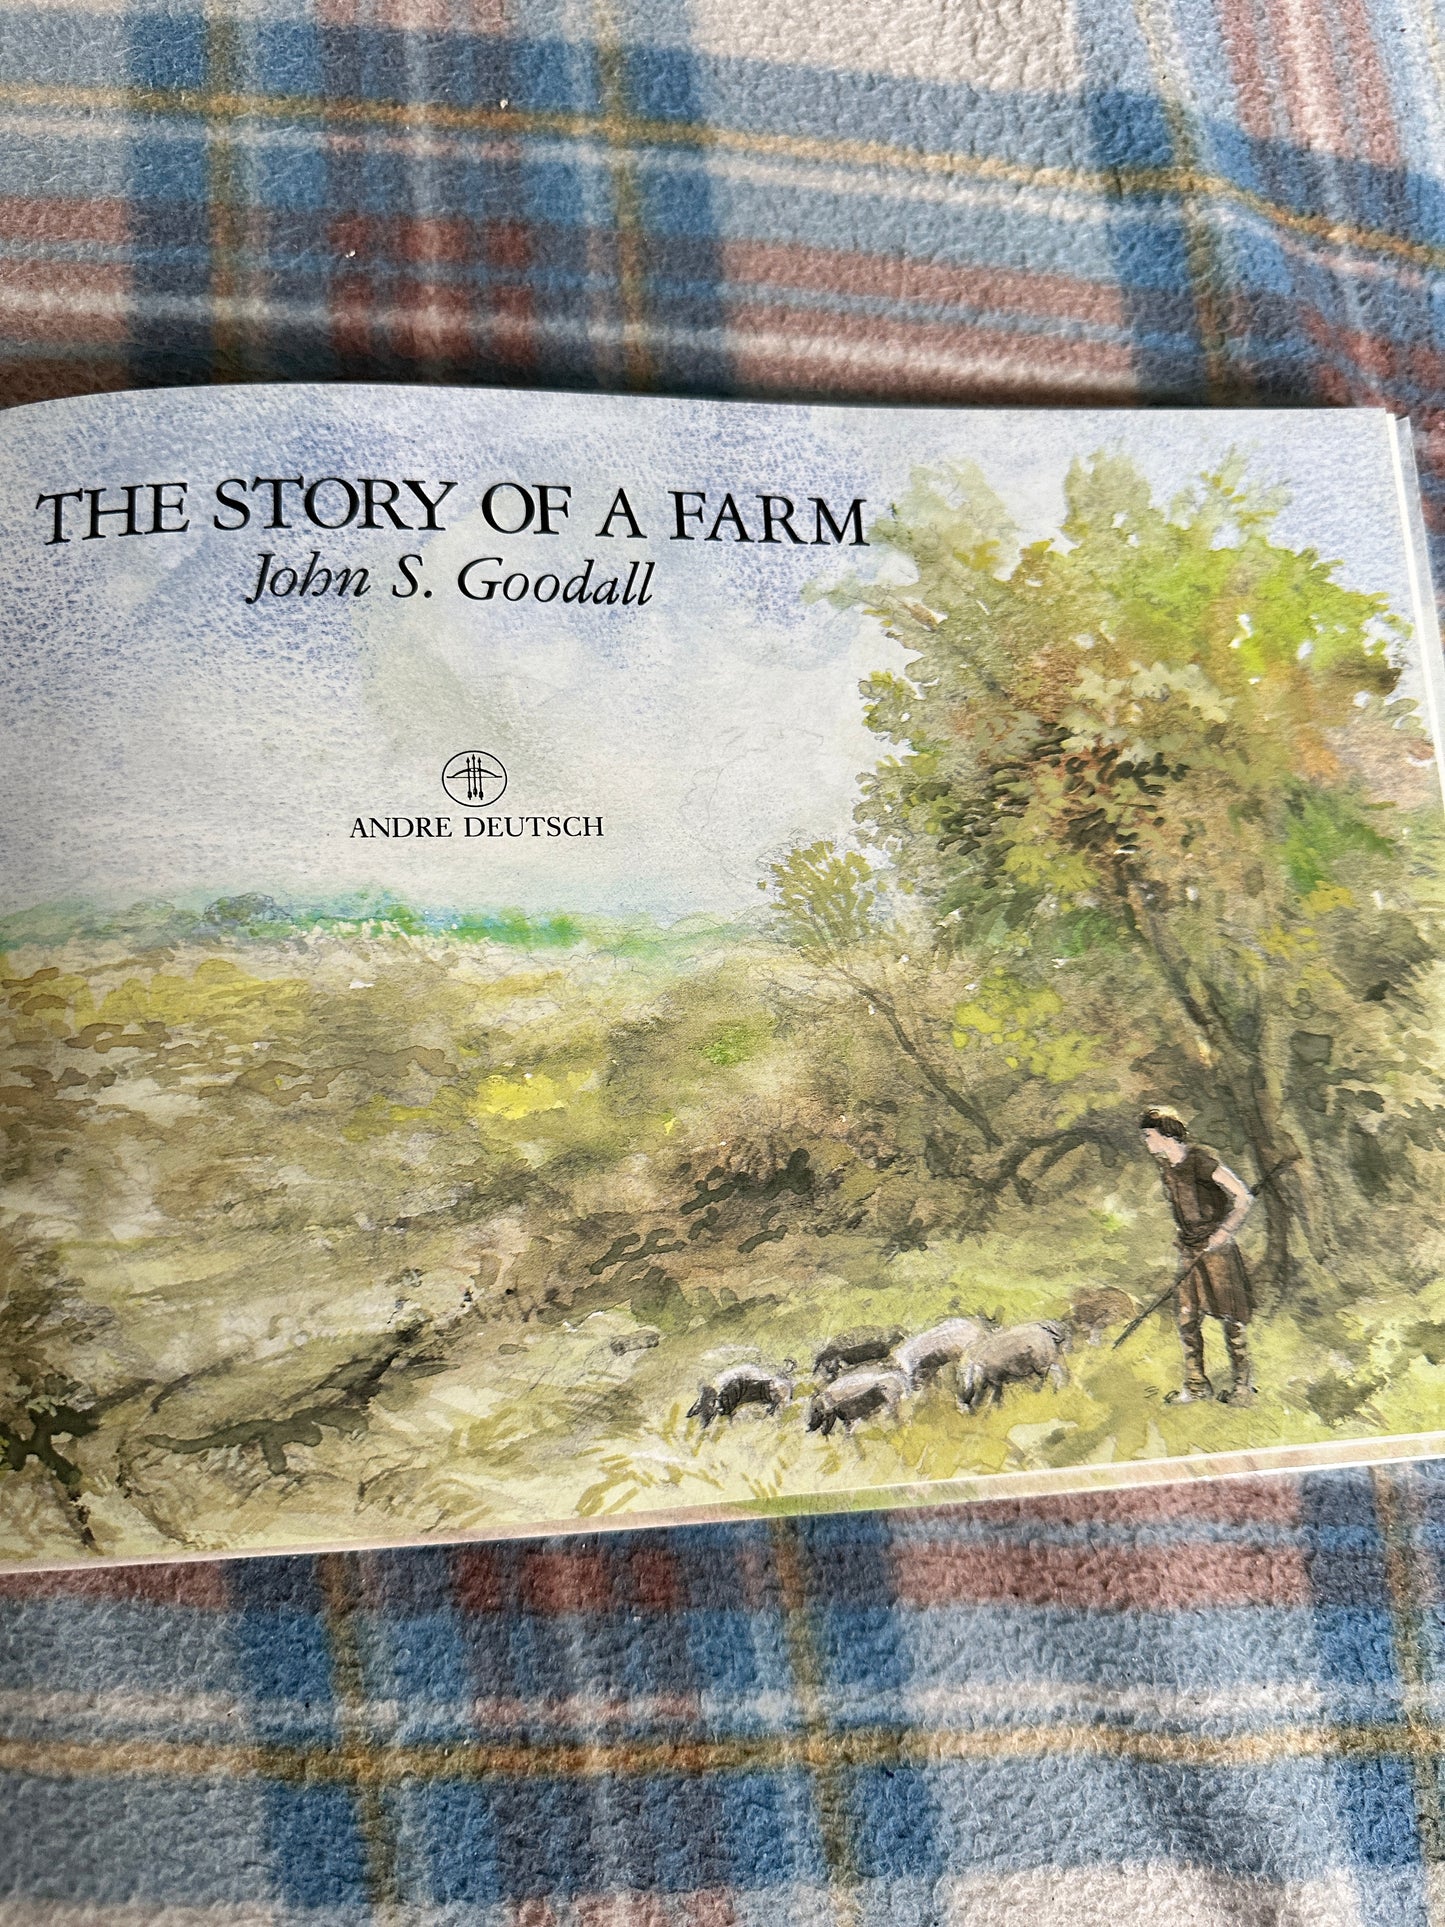 1989*1st* The Story Of A Farm - John S. Goodall(Andre Deutsch Pub)